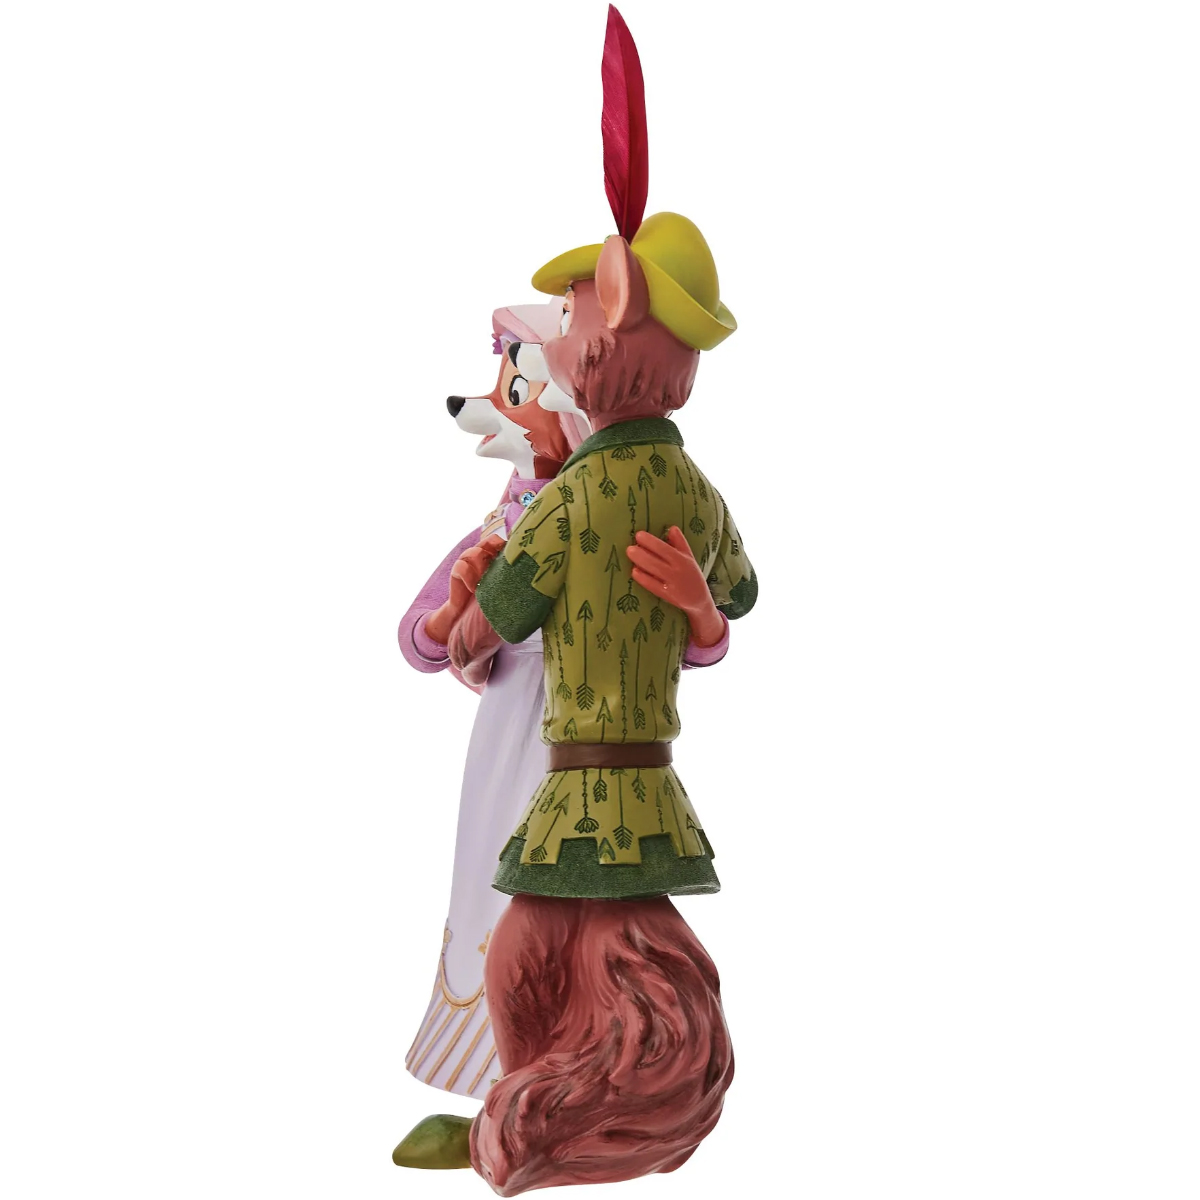 Maid Marion and Robin Hood Figurine